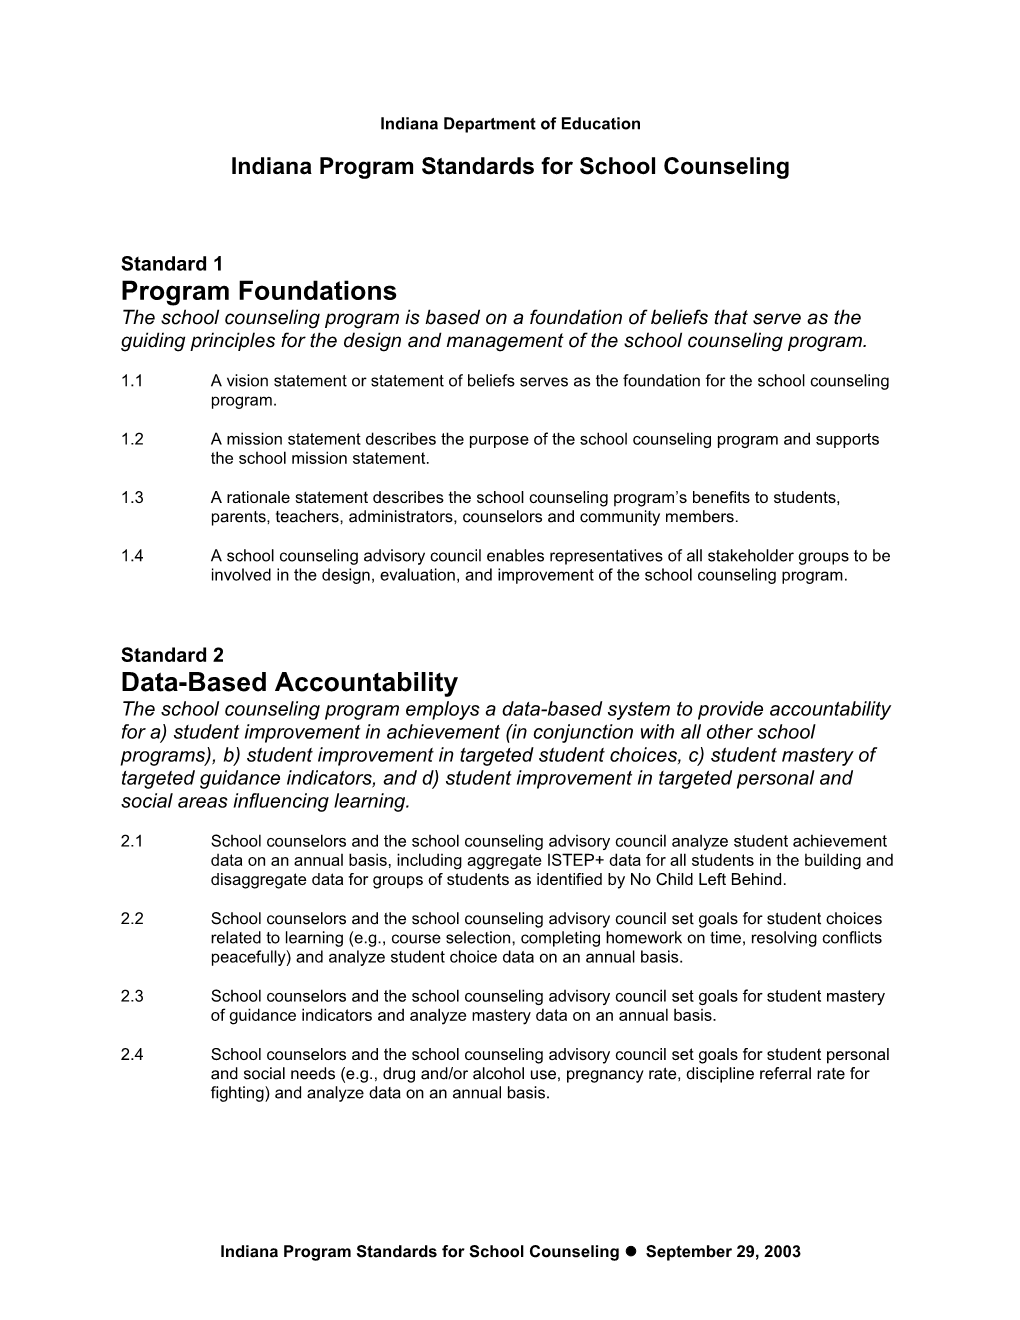 Indiana School Counseling Program Standards